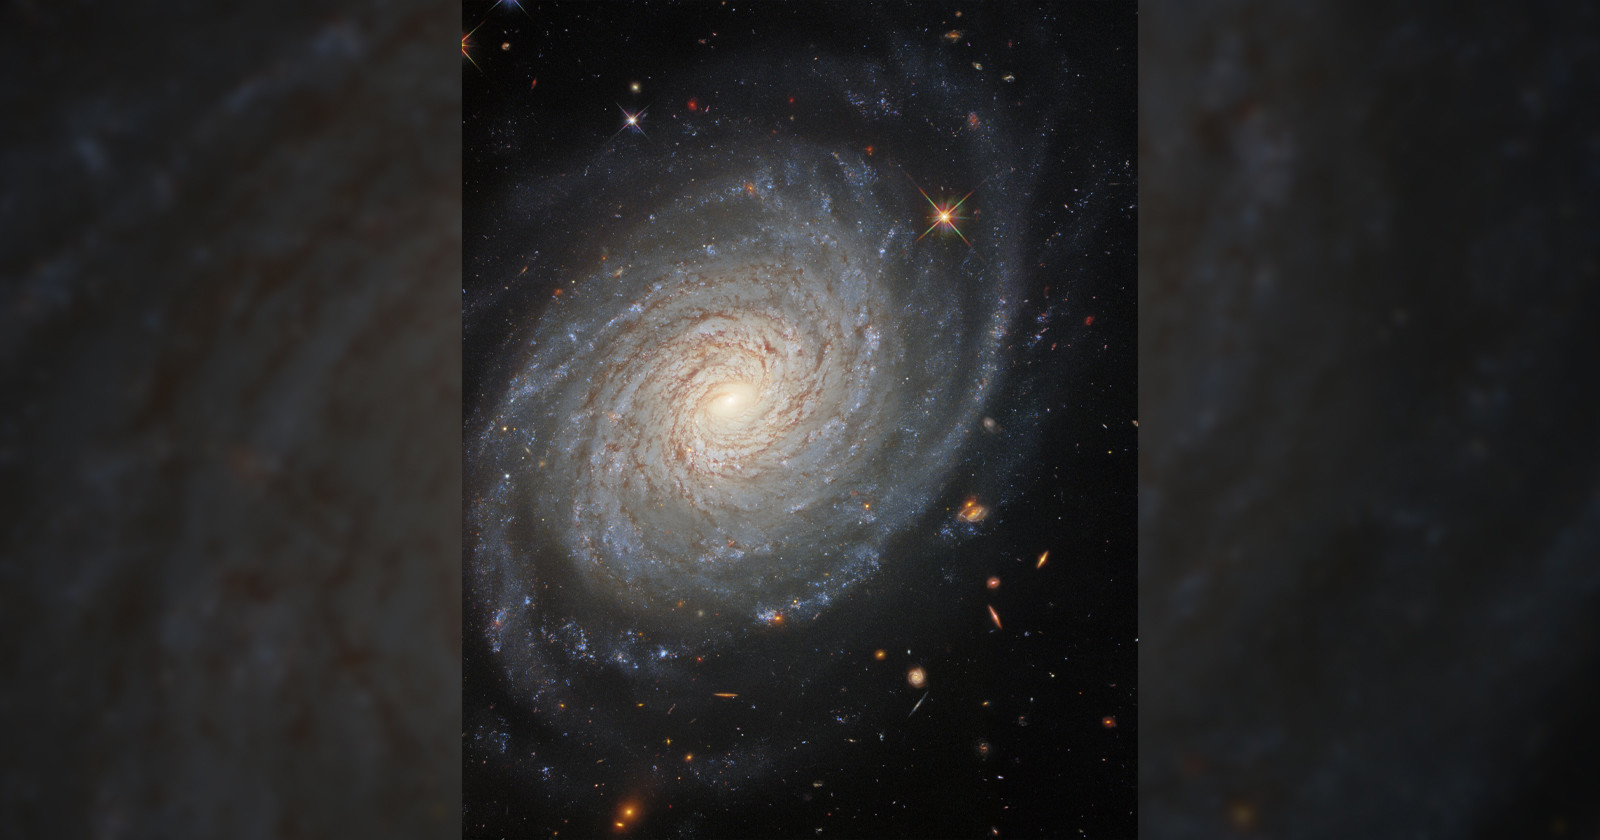  hubble captures majestic photo galaxy explosive past 